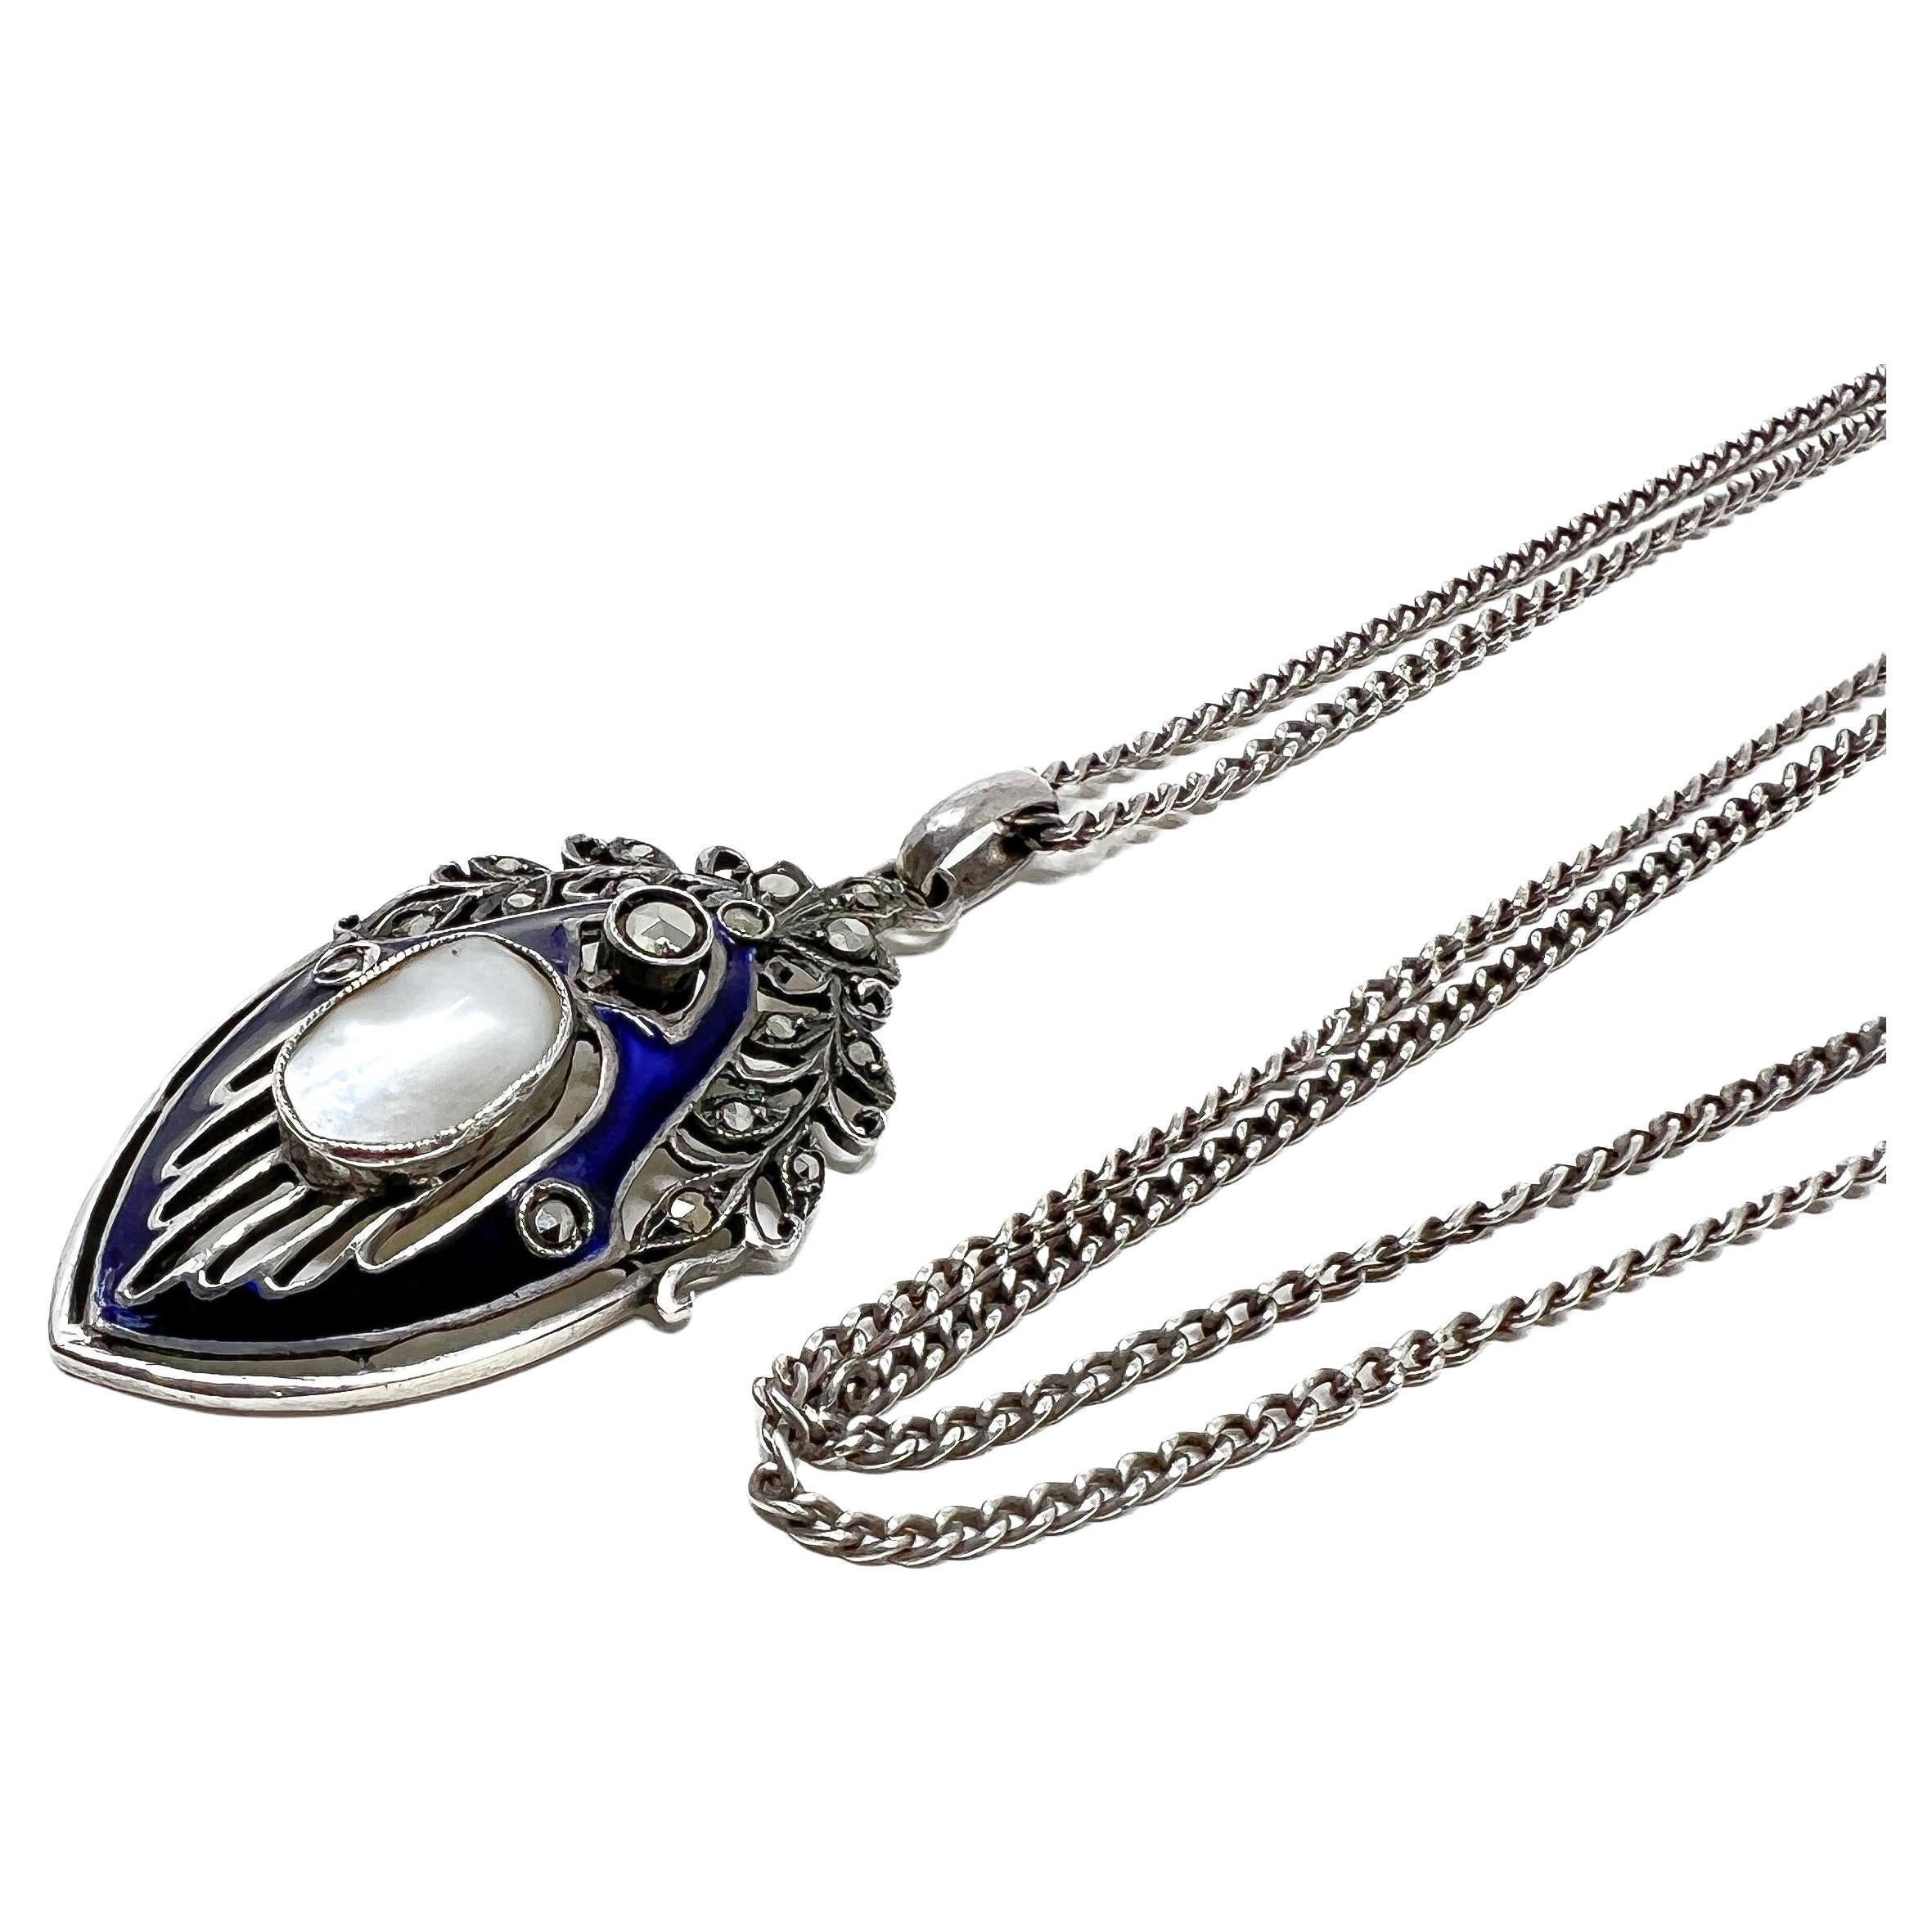 Theodor Fahrner c.1920 A.I.C. Silver, Enamel and Marcasite Vintage Pendant Necklace